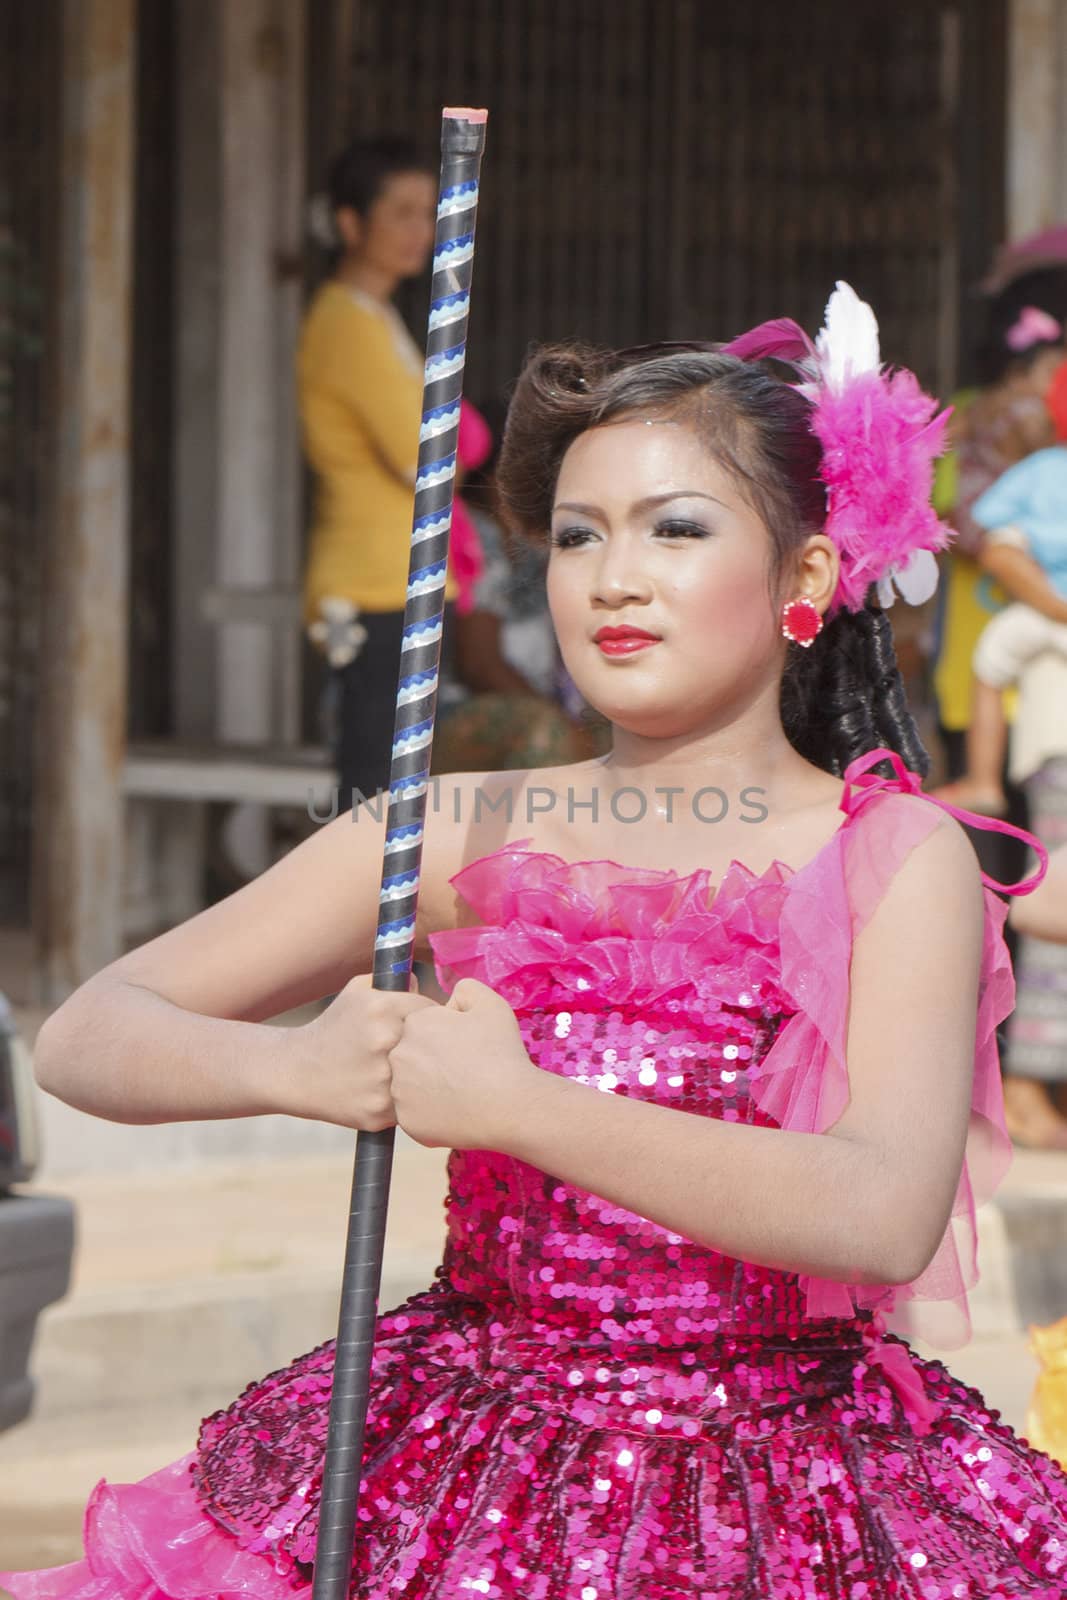 THAILAND - JULY 13: Miss Pirada Suwannarak Drum Major leads holding mace during Dokbual game school parade on July 13, 2012 in Suratthanee, Thailand.